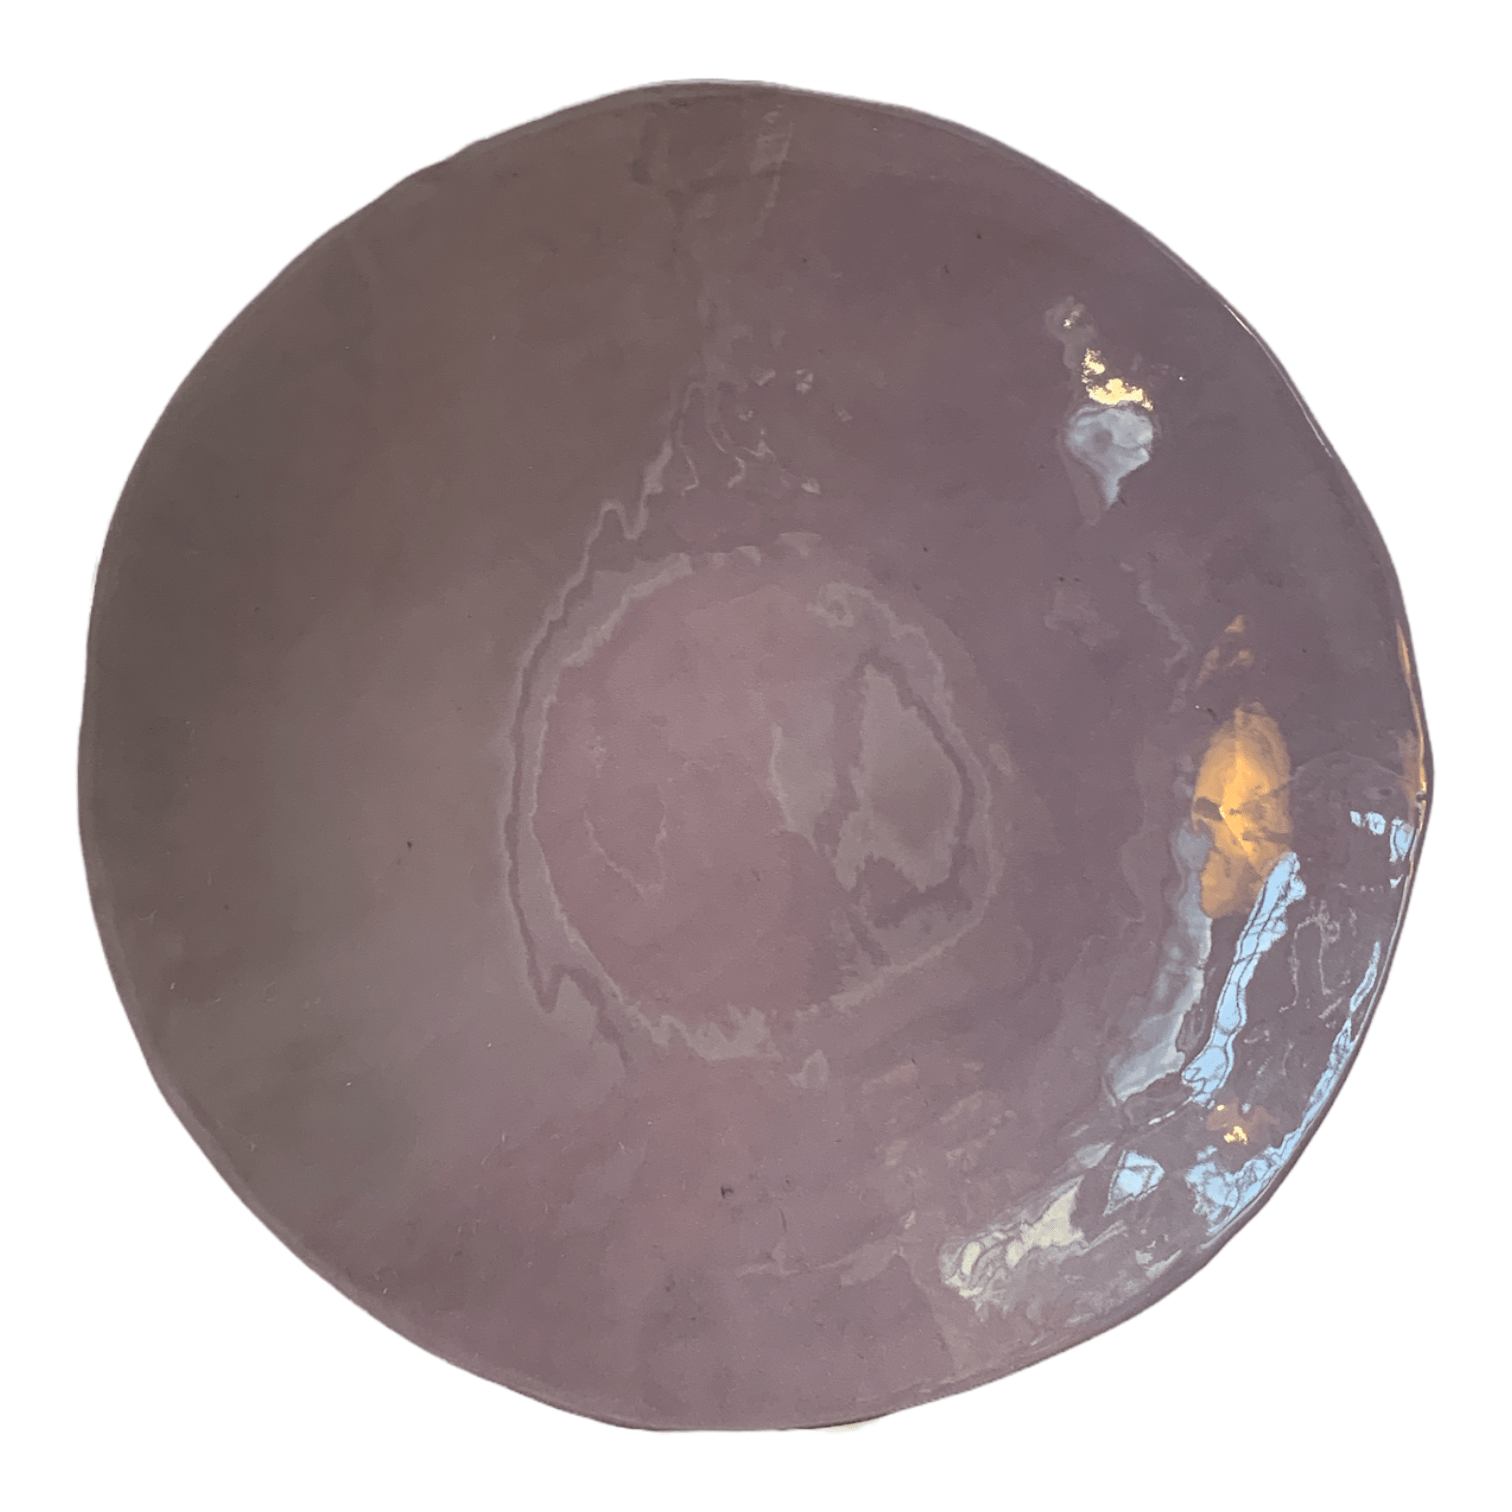 Ceramic Side Plate Lavender